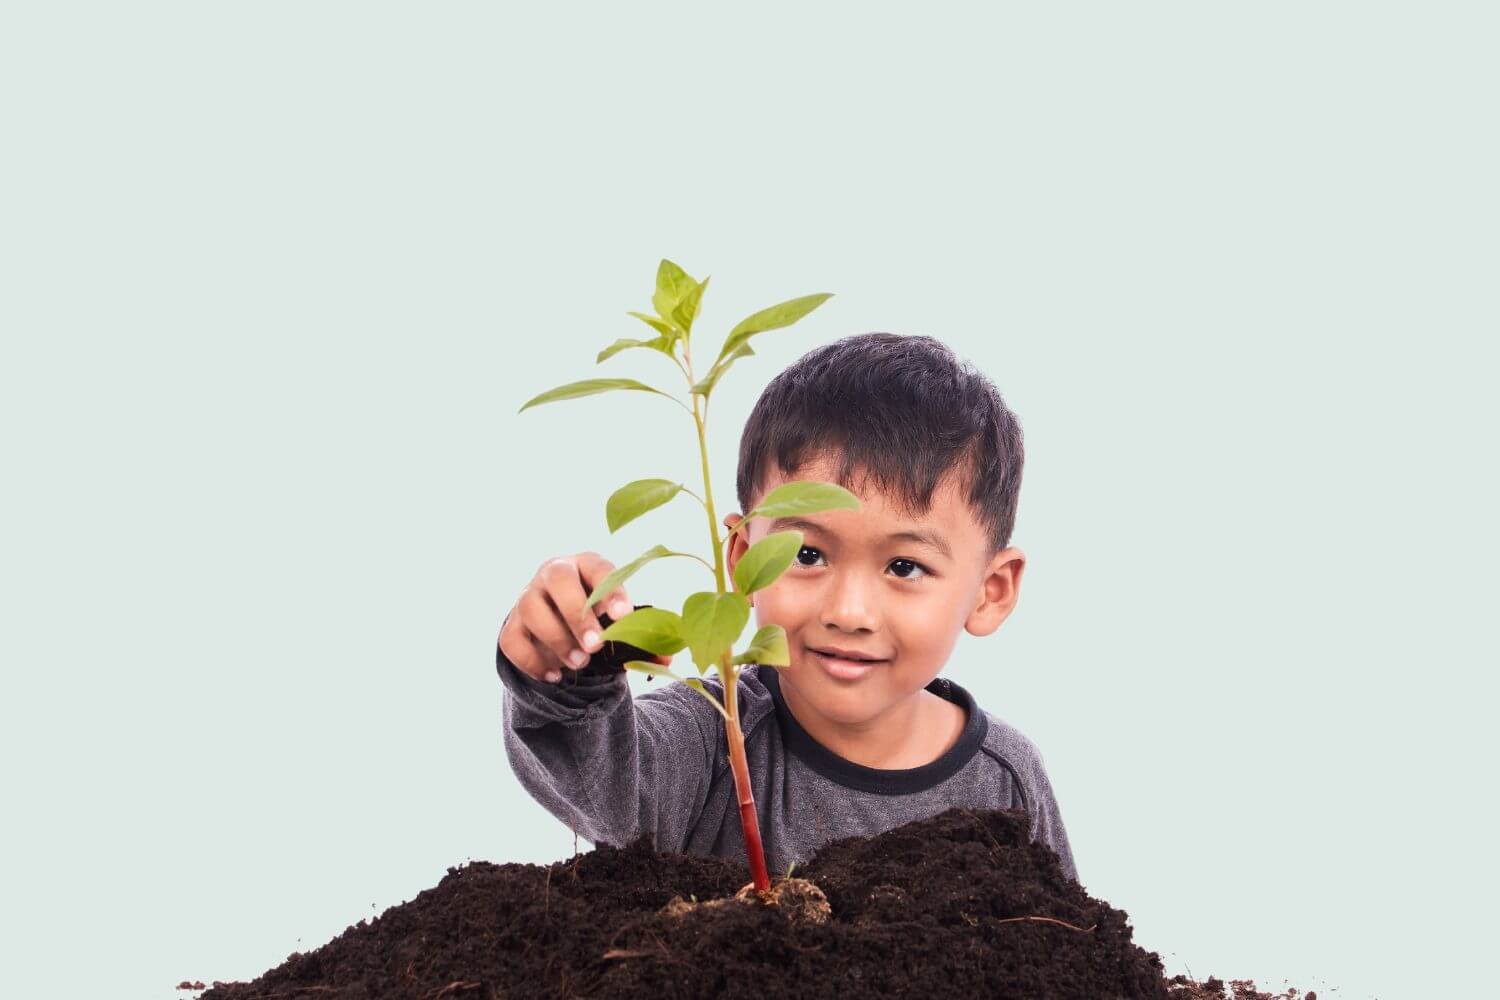 little boy touching plant in dirt